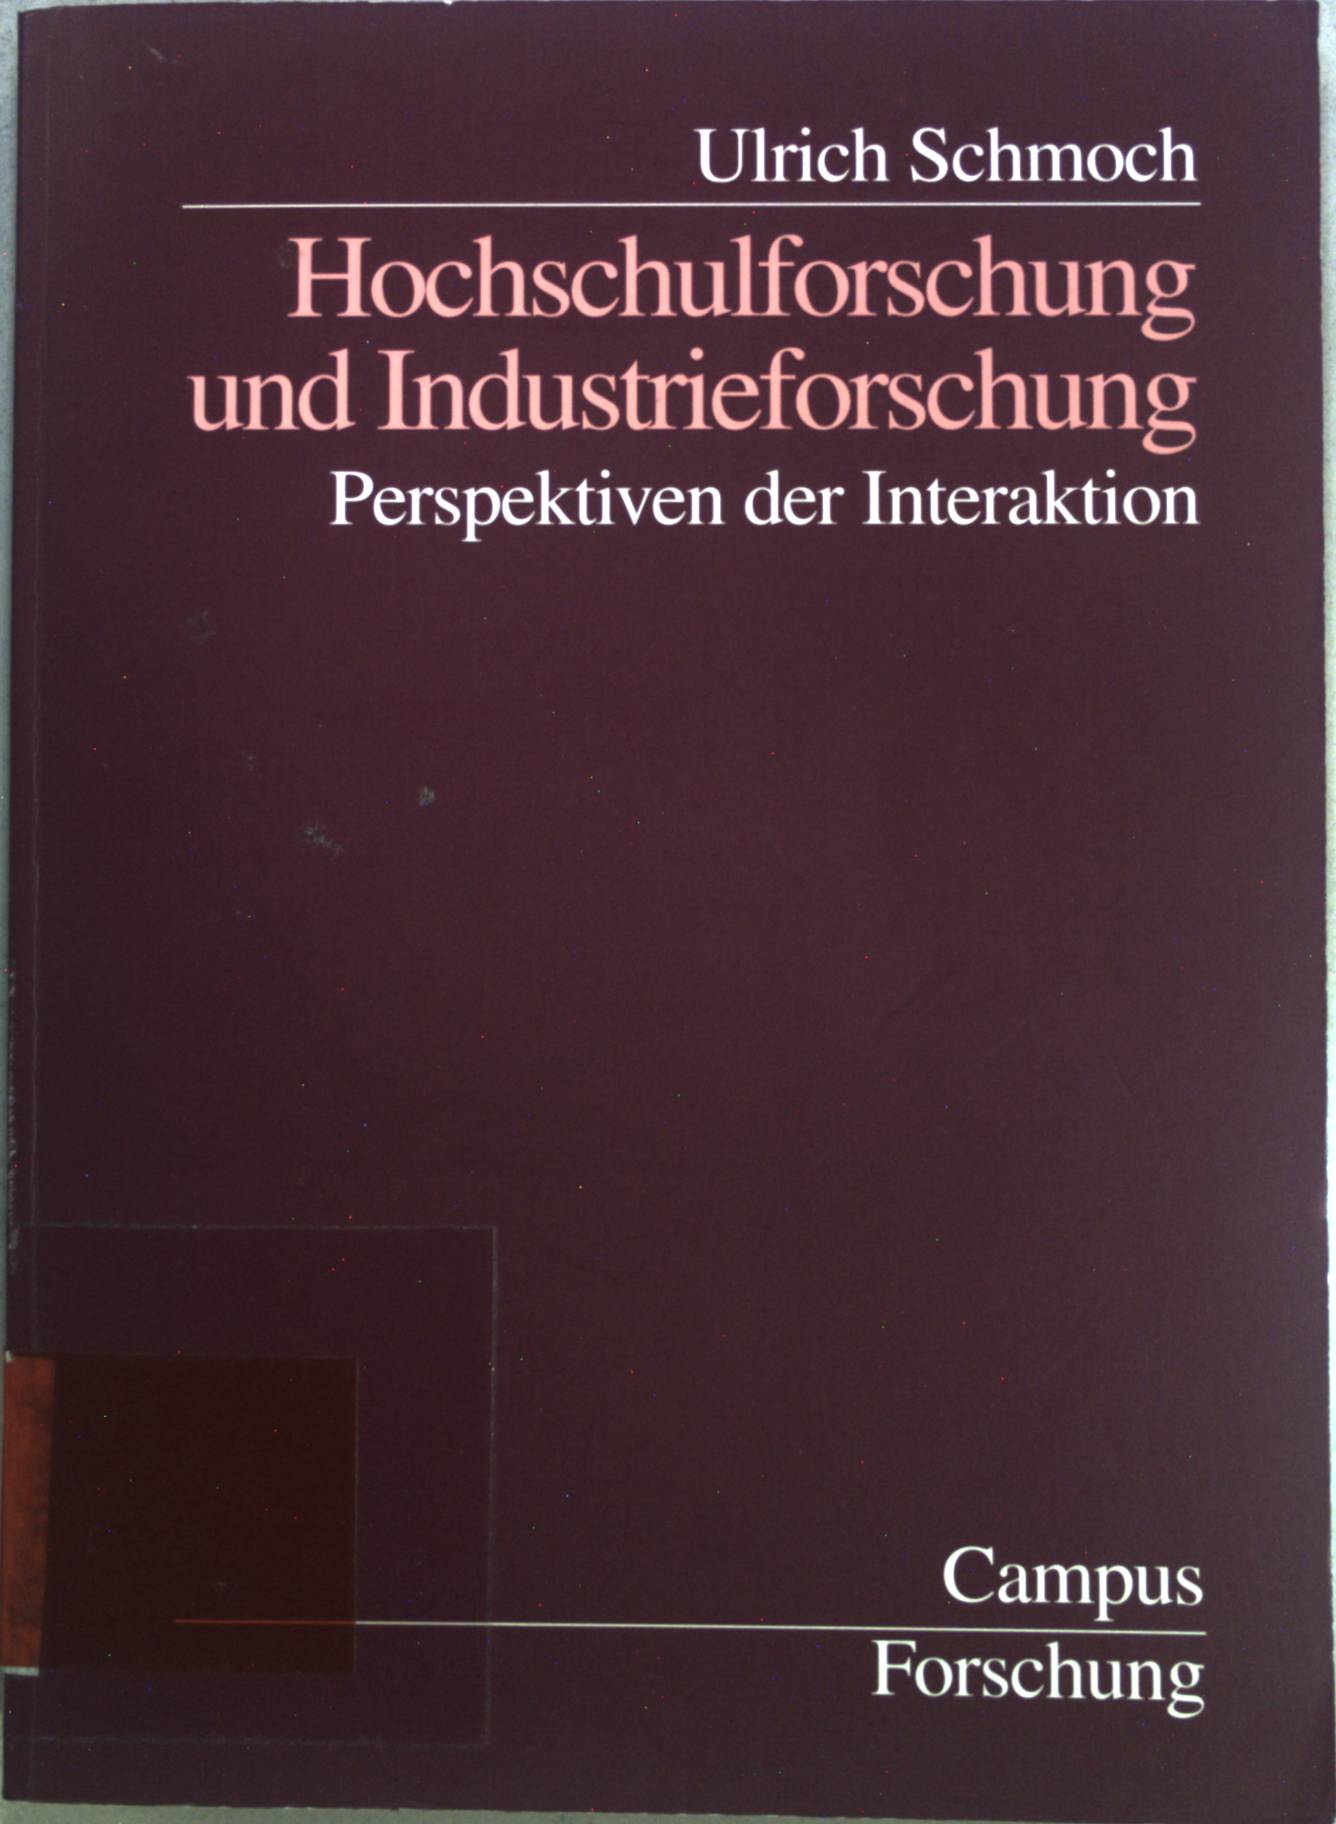 Hochschulforschung und Industrieforschung : Perspektiven der Interaktion. Campus Forschung Band 858. - Schmoch, Ulrich